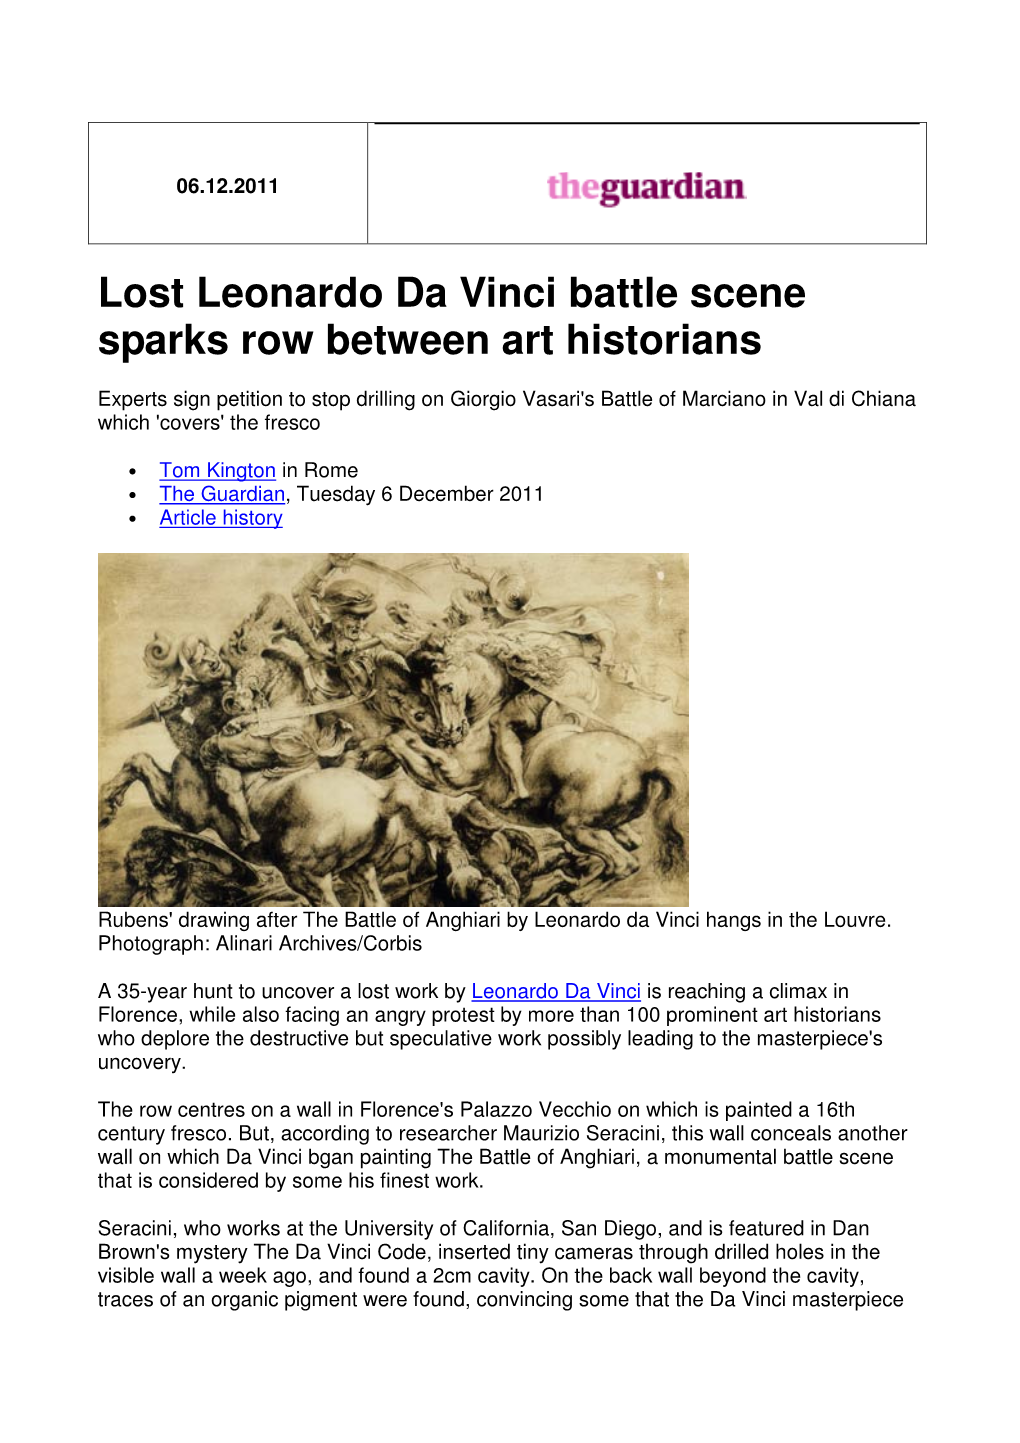 Lost Leonardo Da Vinci Battle Scene Sparks Row Between Art Historians